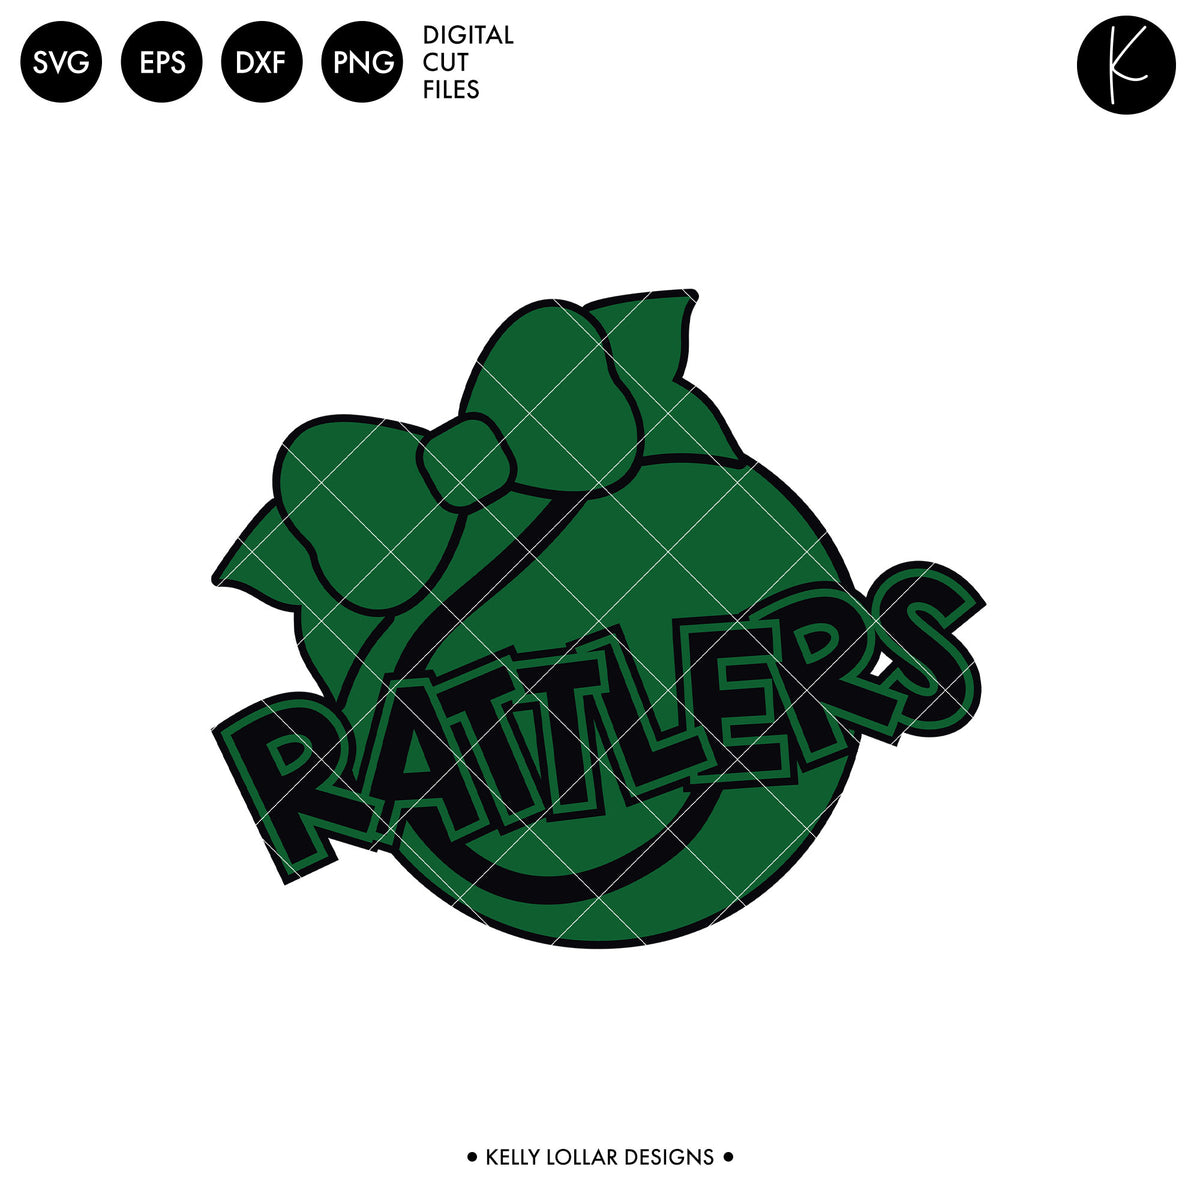 Rattlers Tennis Bundle | SVG DXF EPS PNG Cut Files